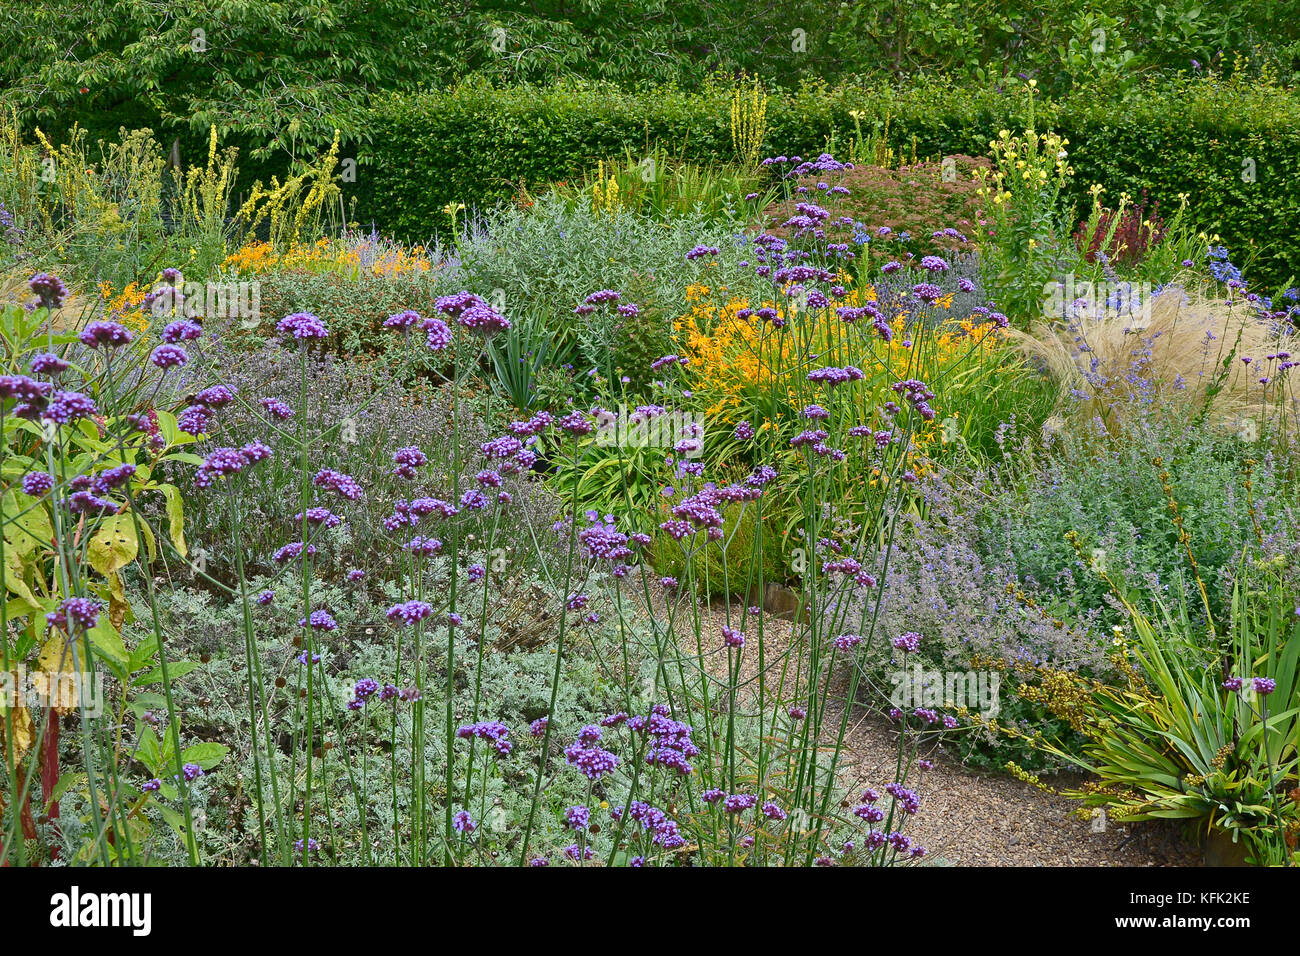 Garden flower border with flowering Verbena Bonariensis, Crocosmia and Verbascum making a colourful display Stock Photo